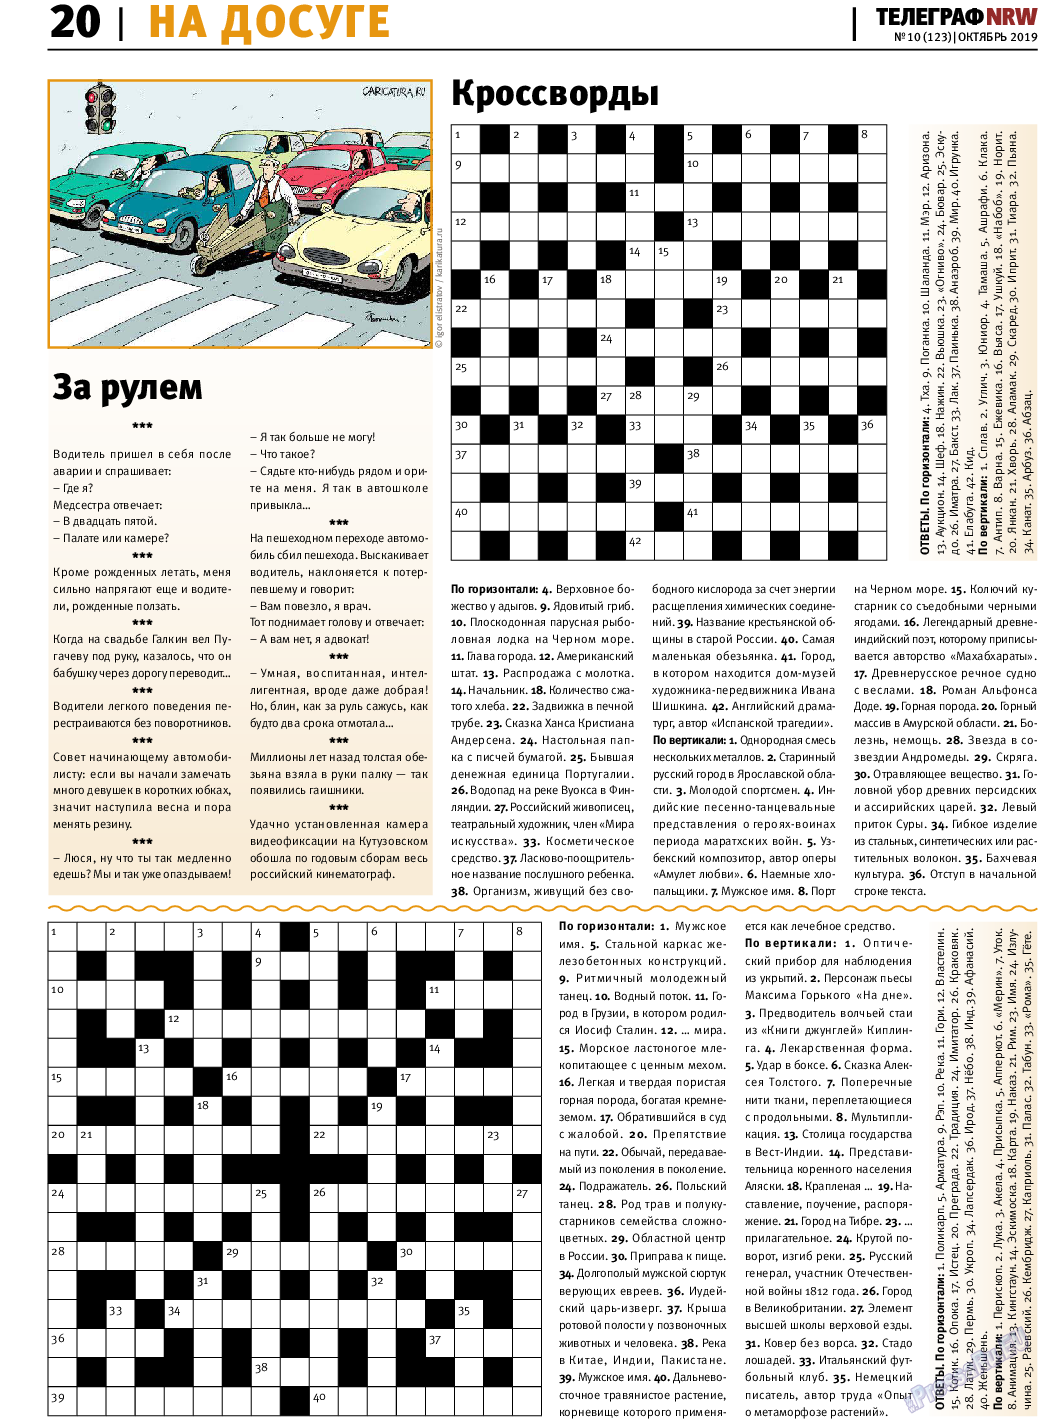 Телеграф NRW, газета. 2019 №10 стр.20